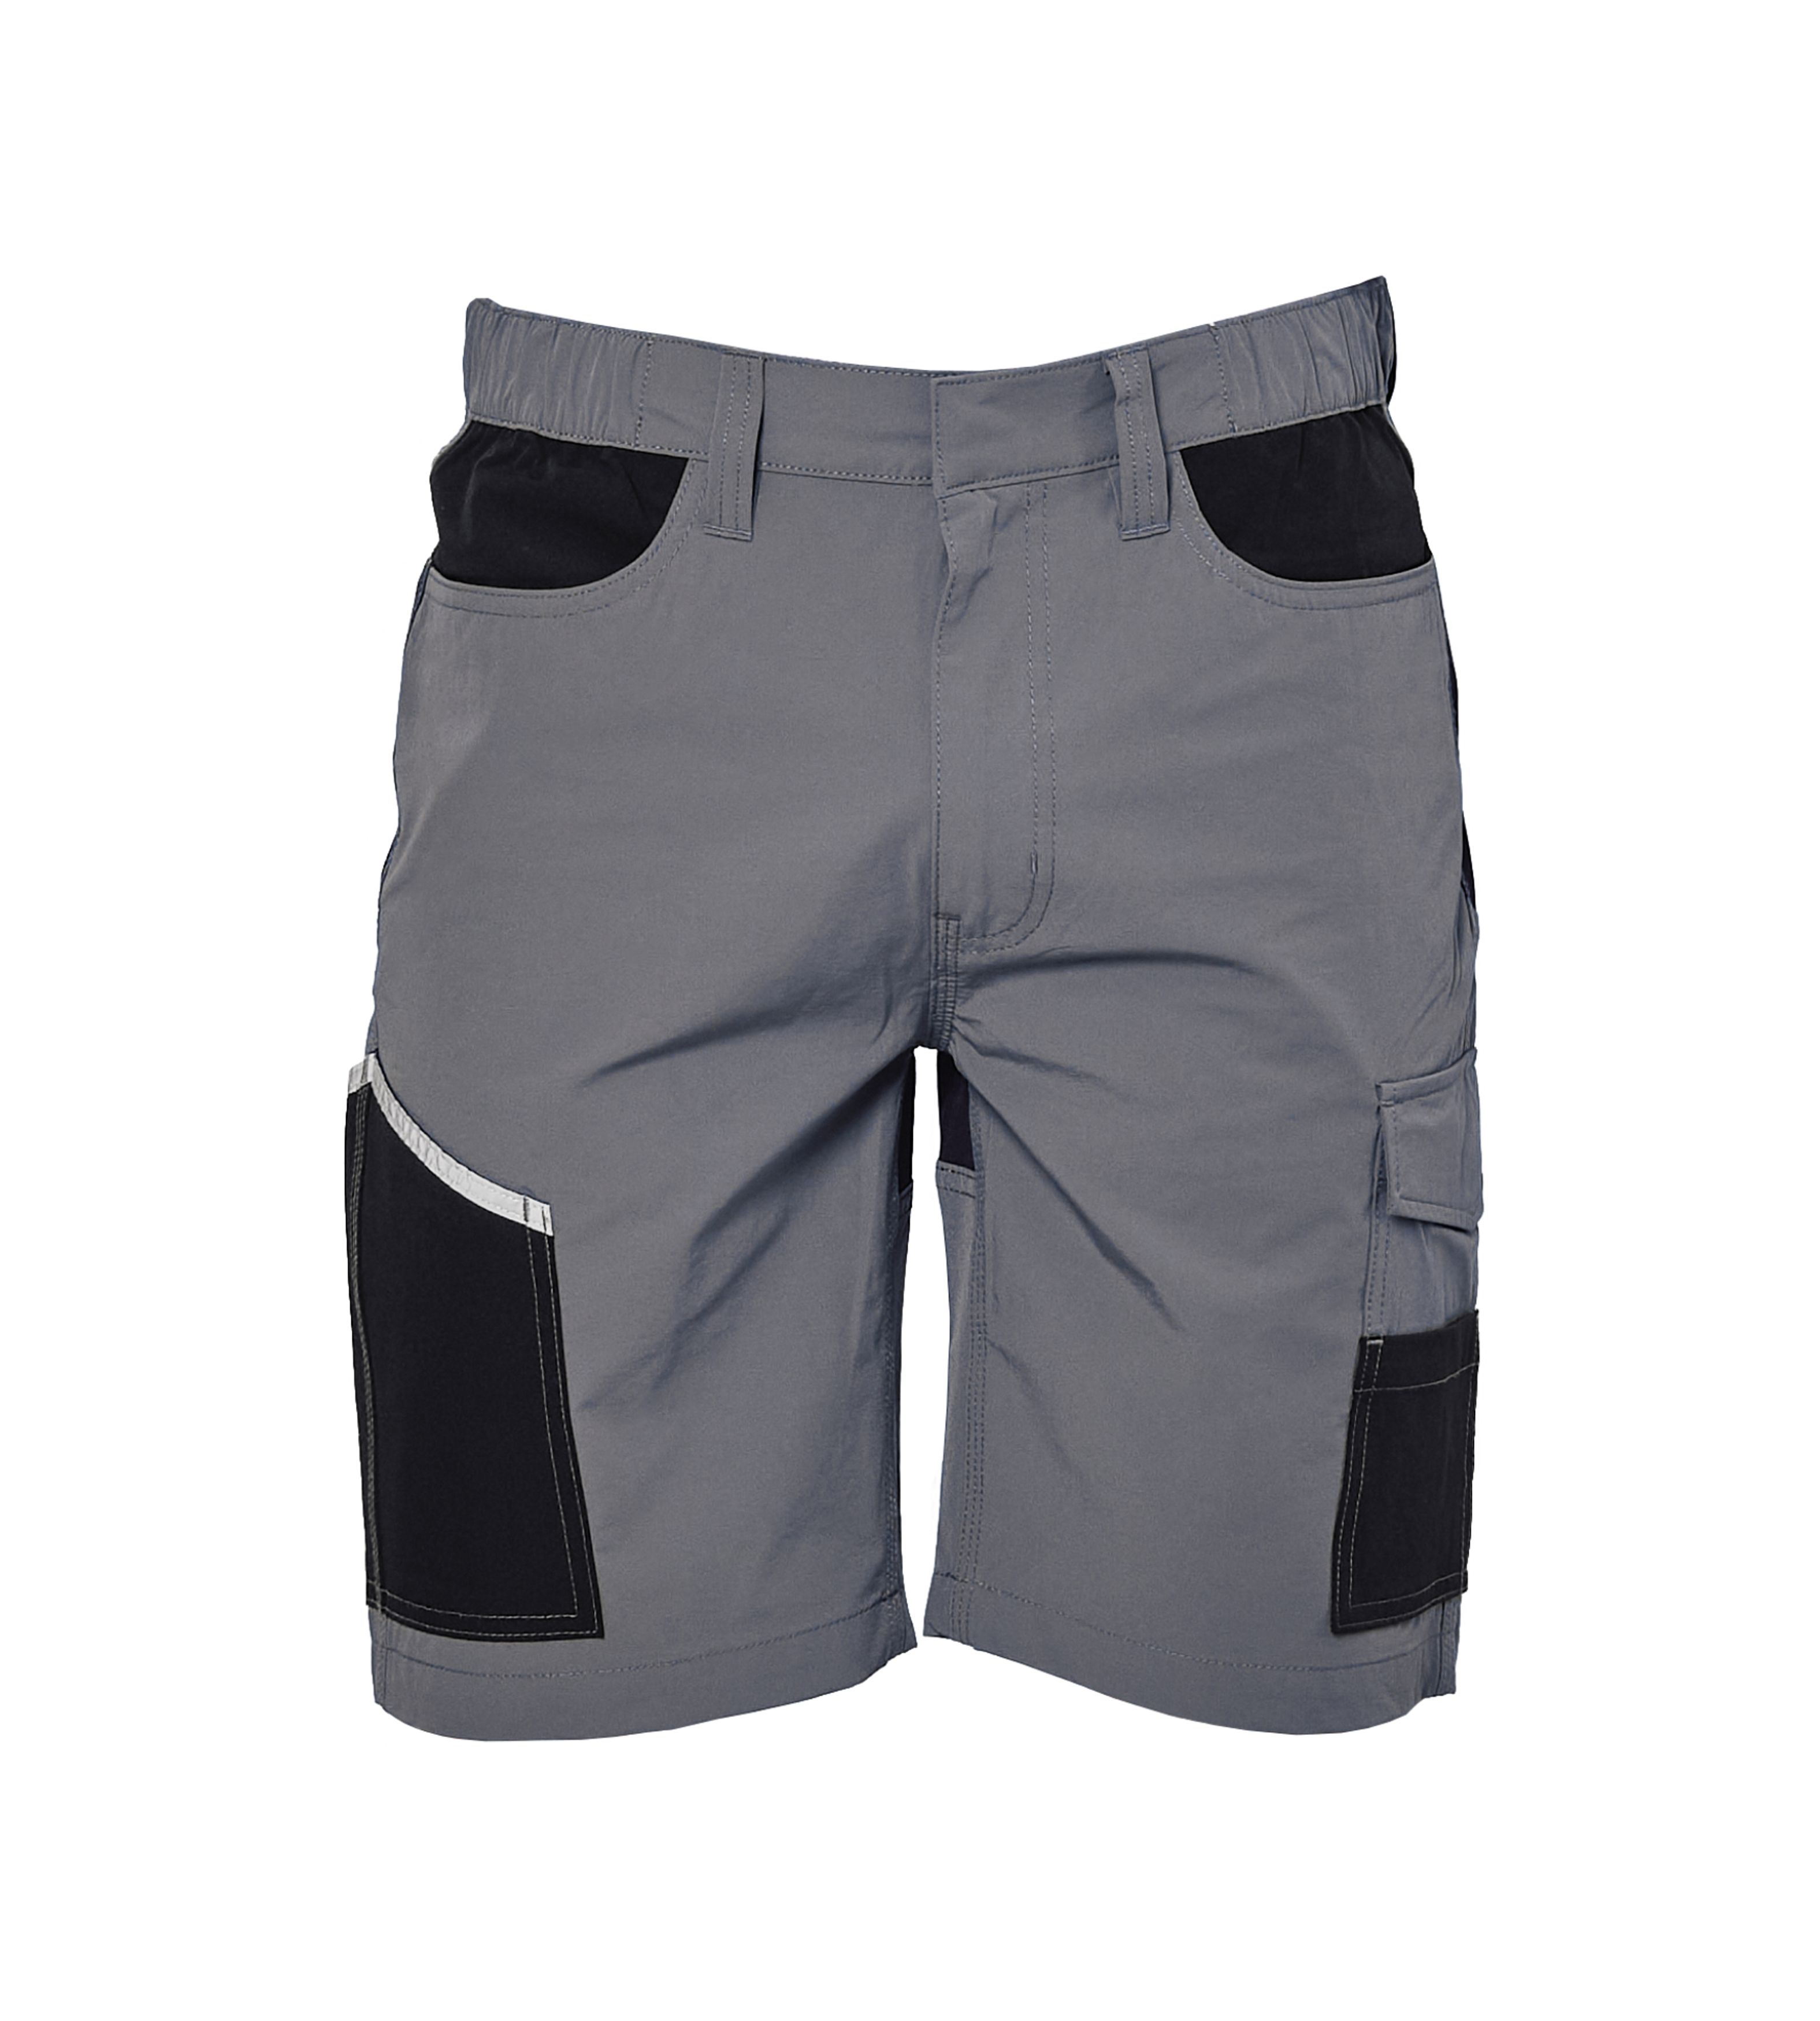 Pantalone Brennero Shorts Man